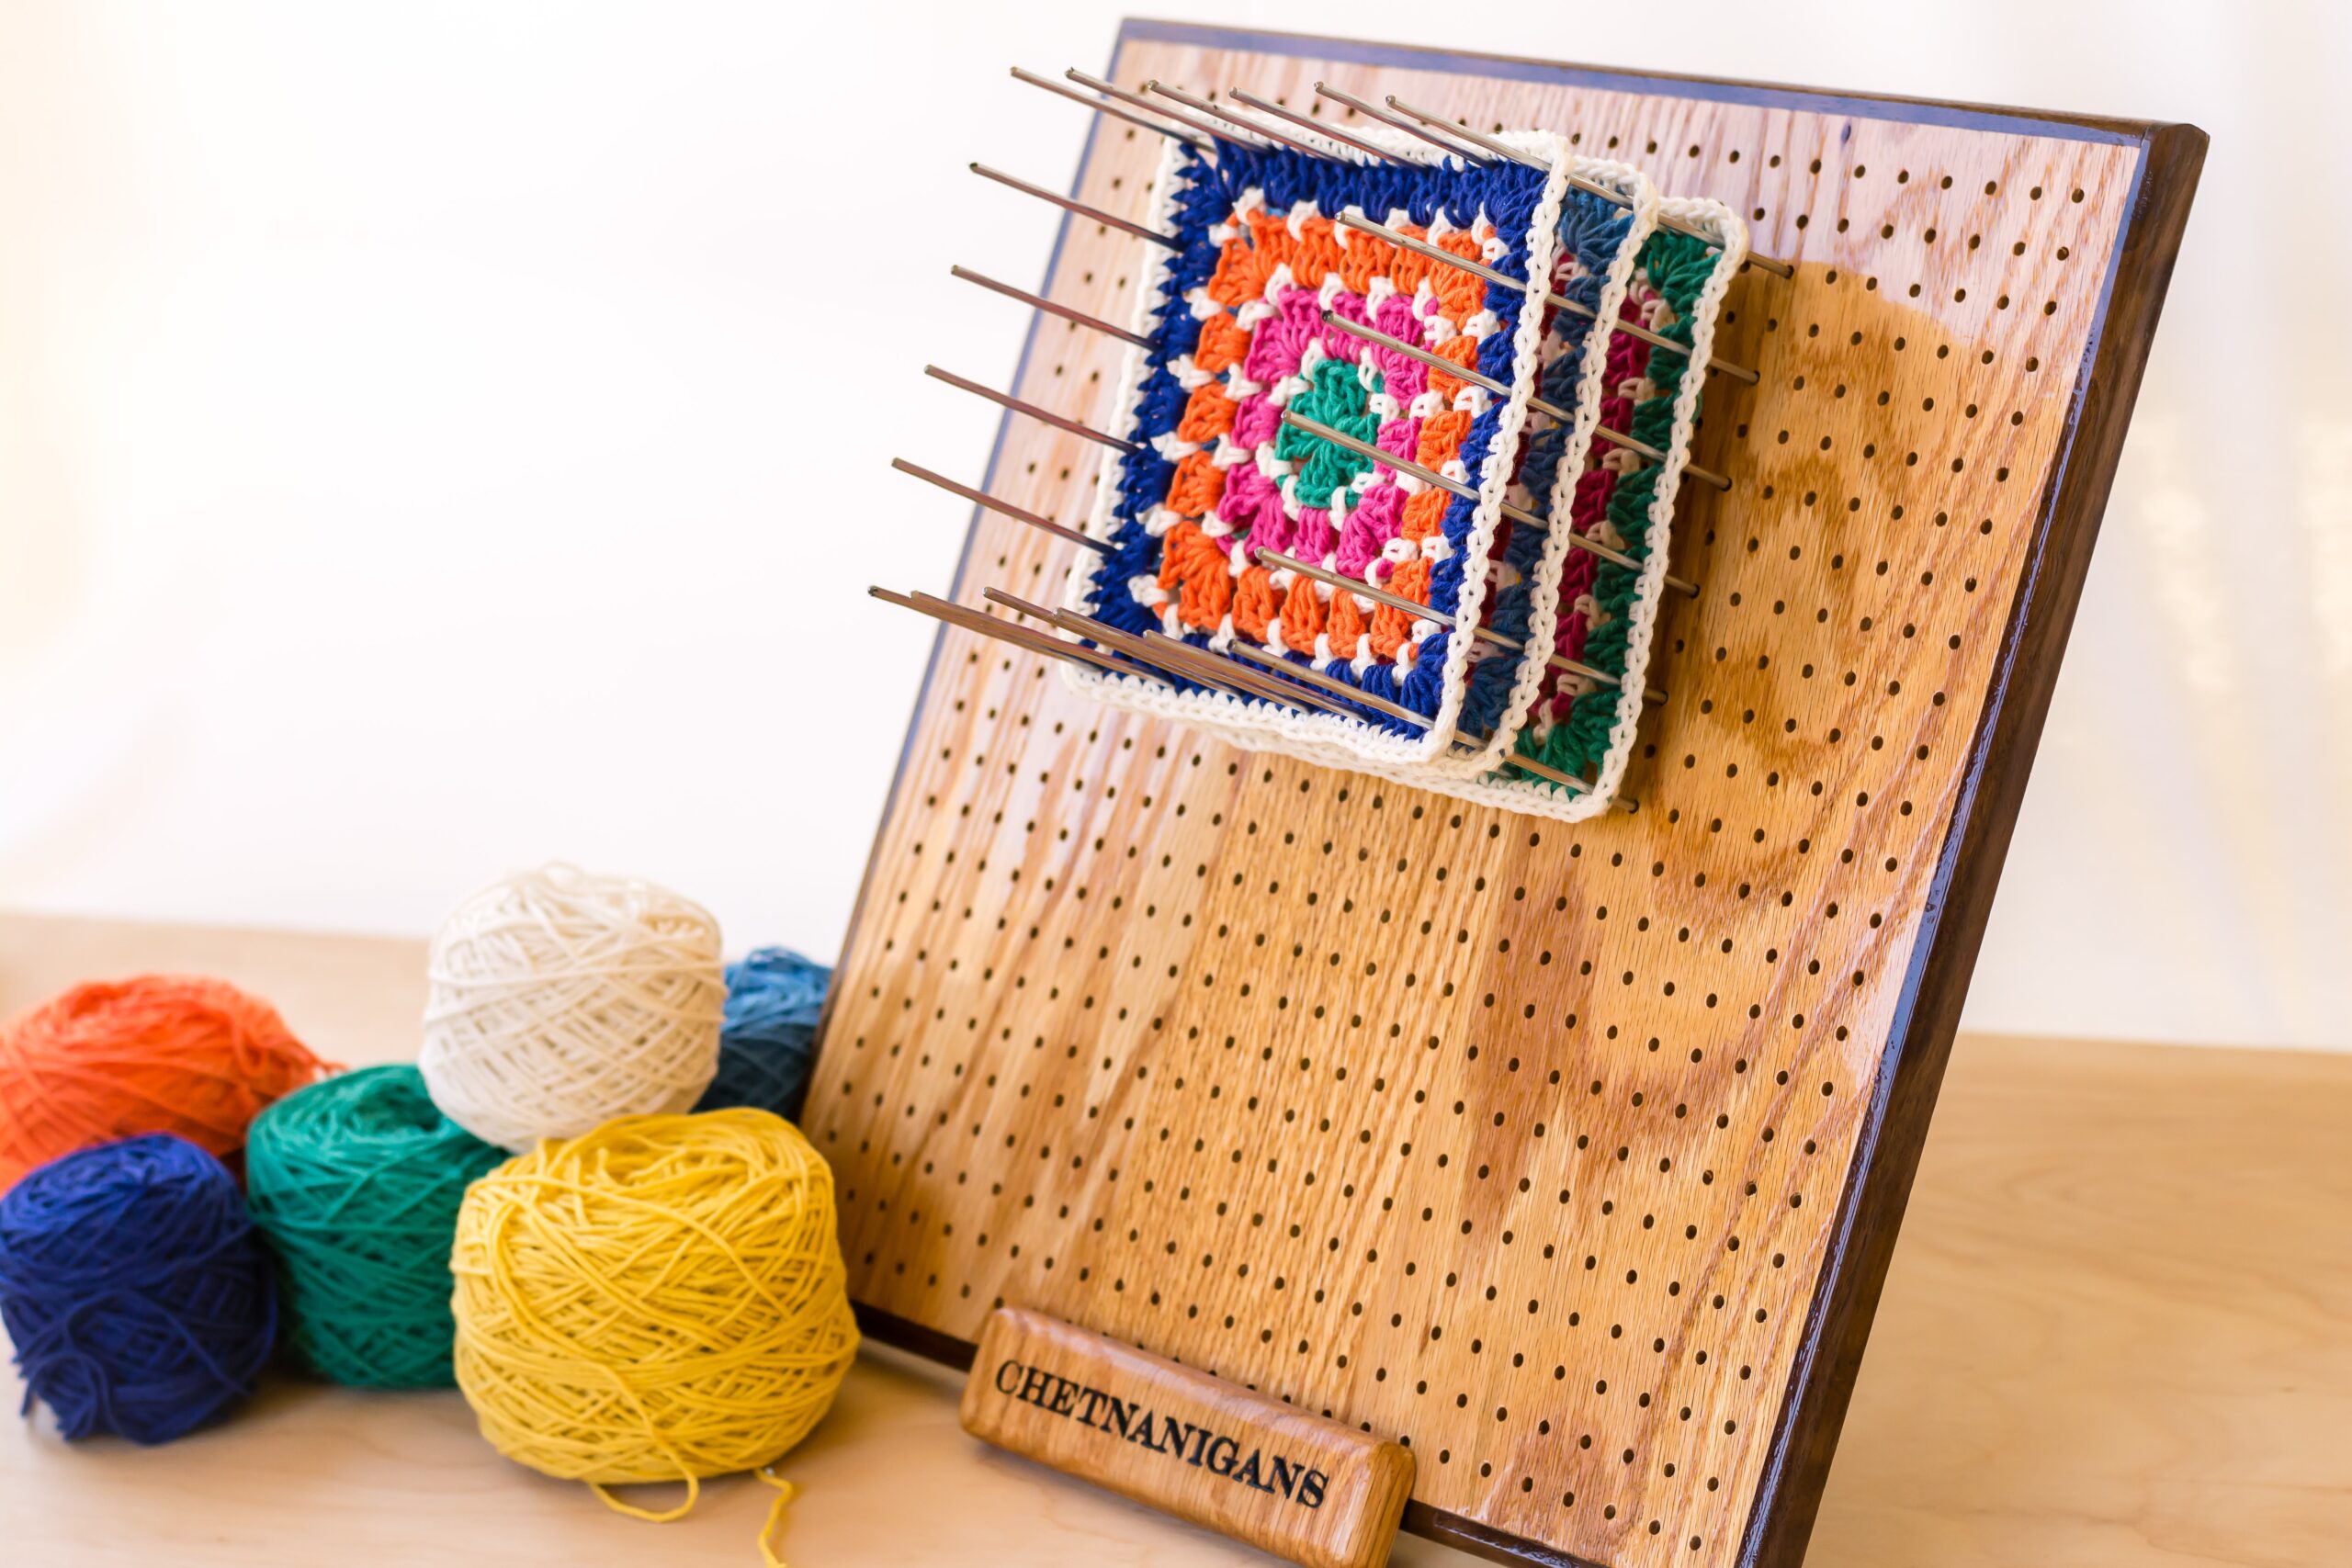 The “BlocksAll” Afghan / Granny Square Crochet Blocking Board